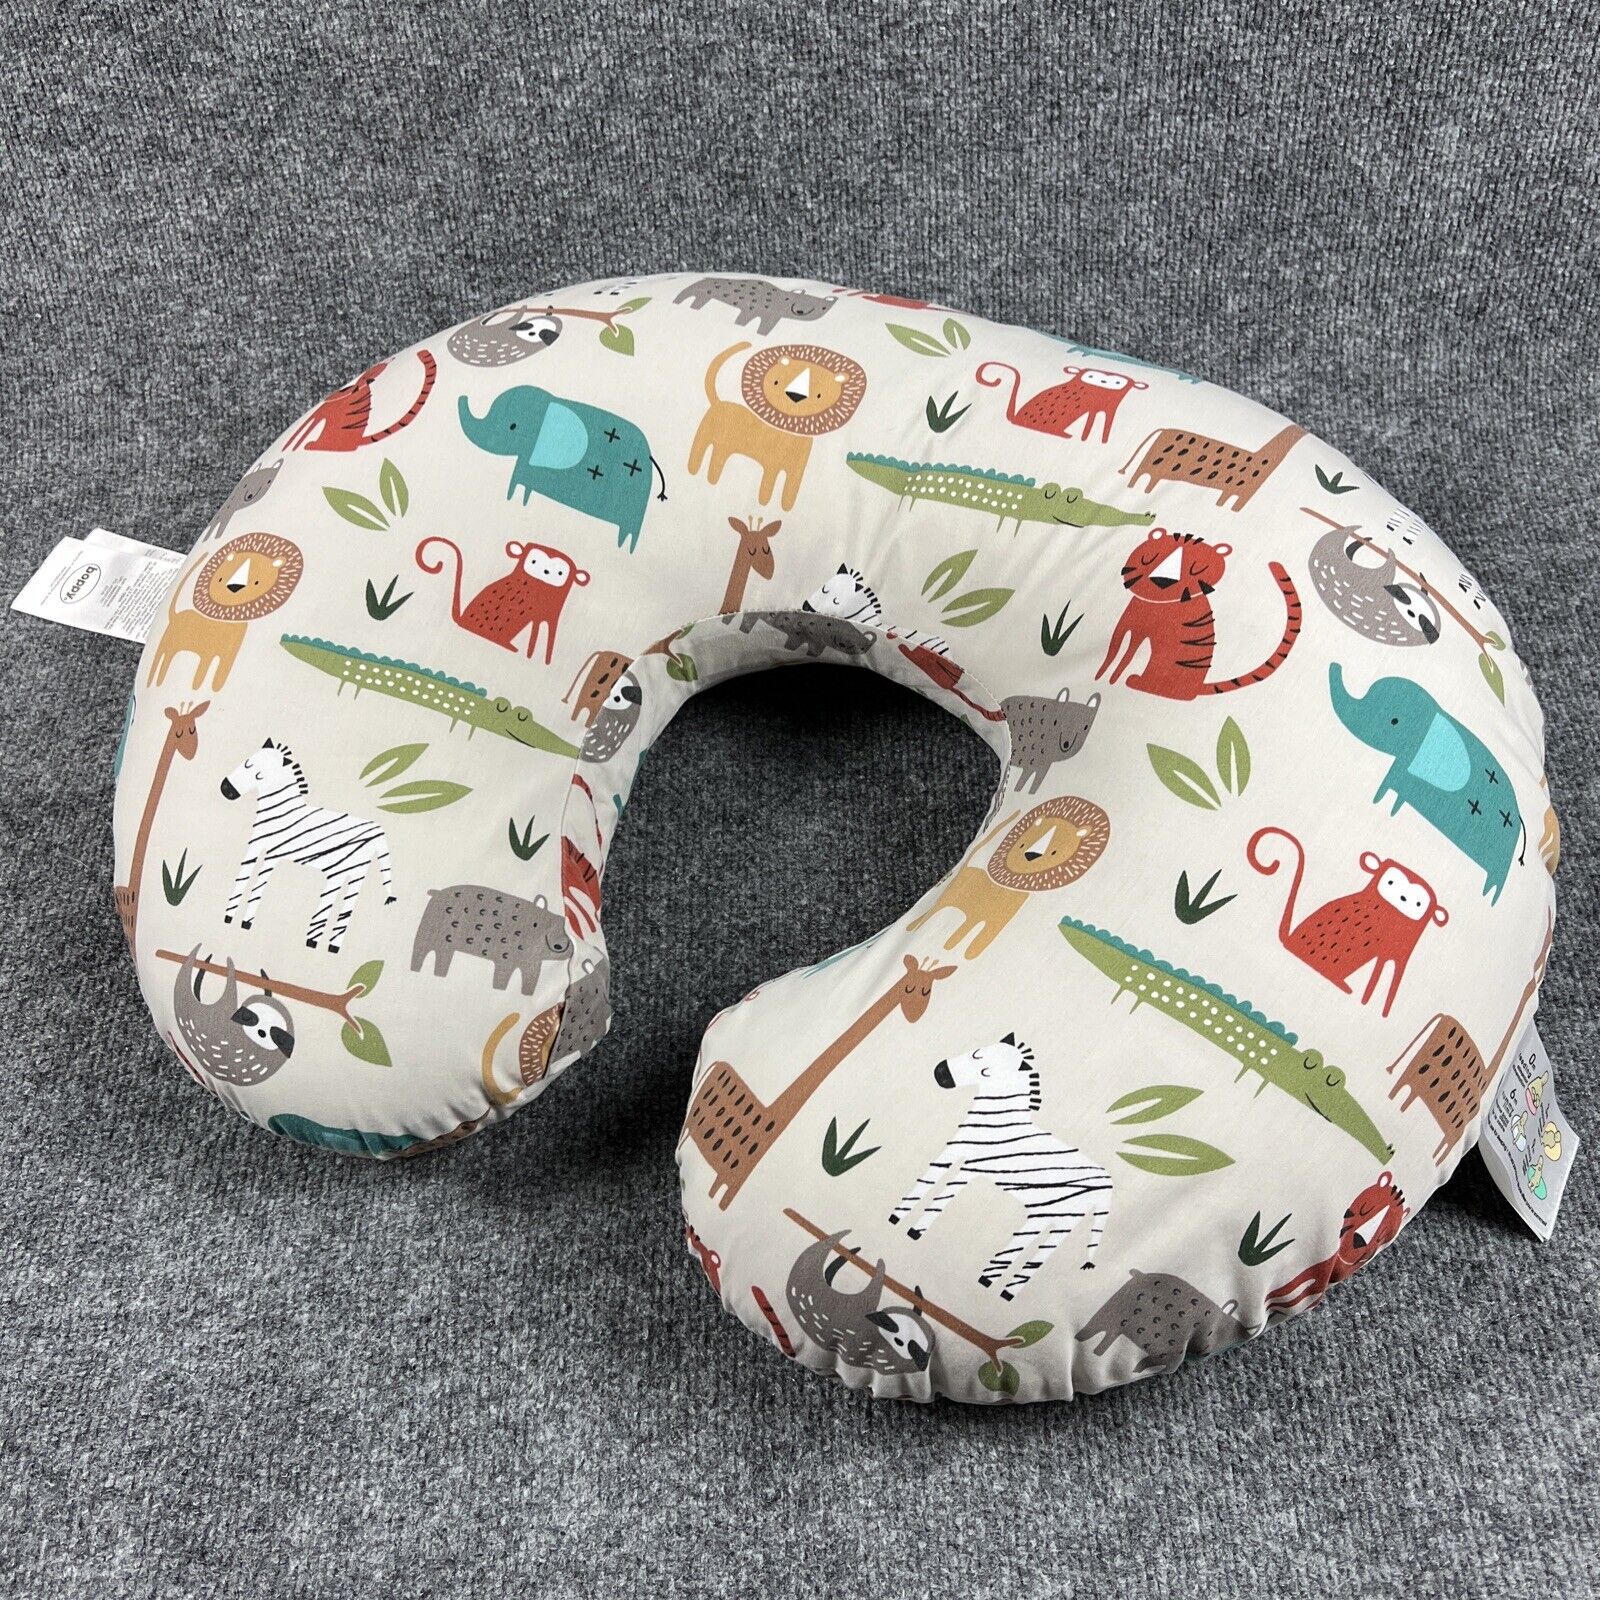 Boppy Original Feeding & Infant Support Pillow & Cover - Neutral Jungle/safari